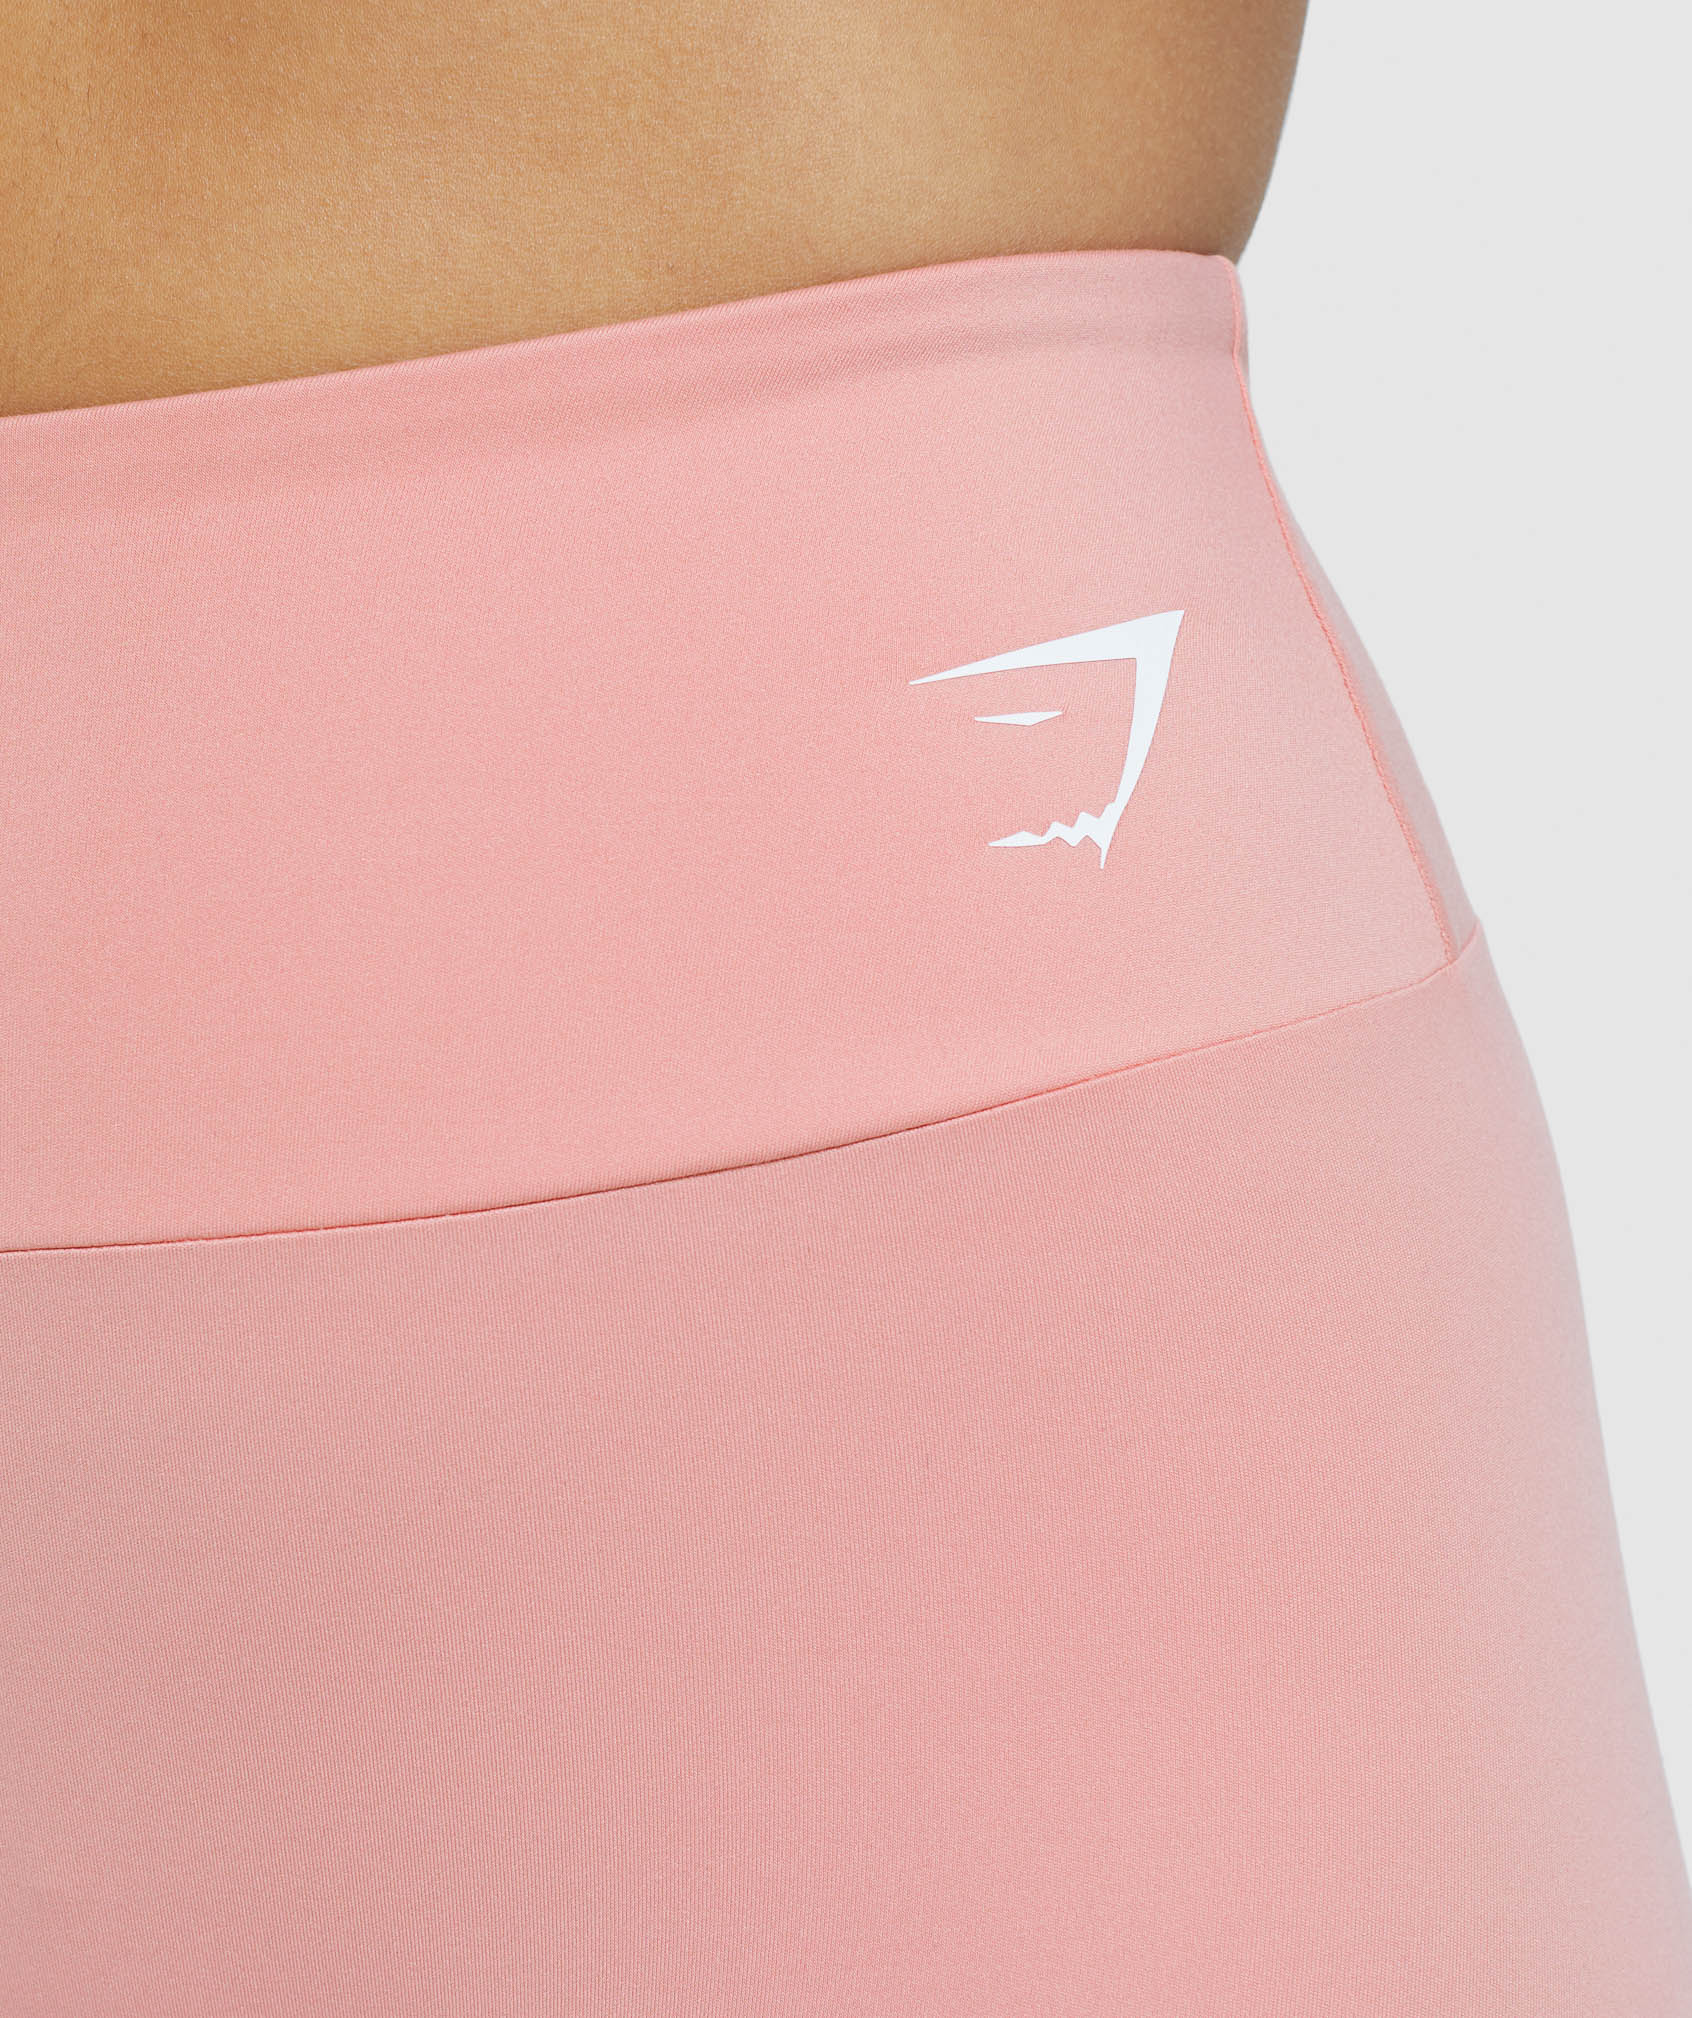 Power Training Legging- Hot Pink – GymPro Apparel